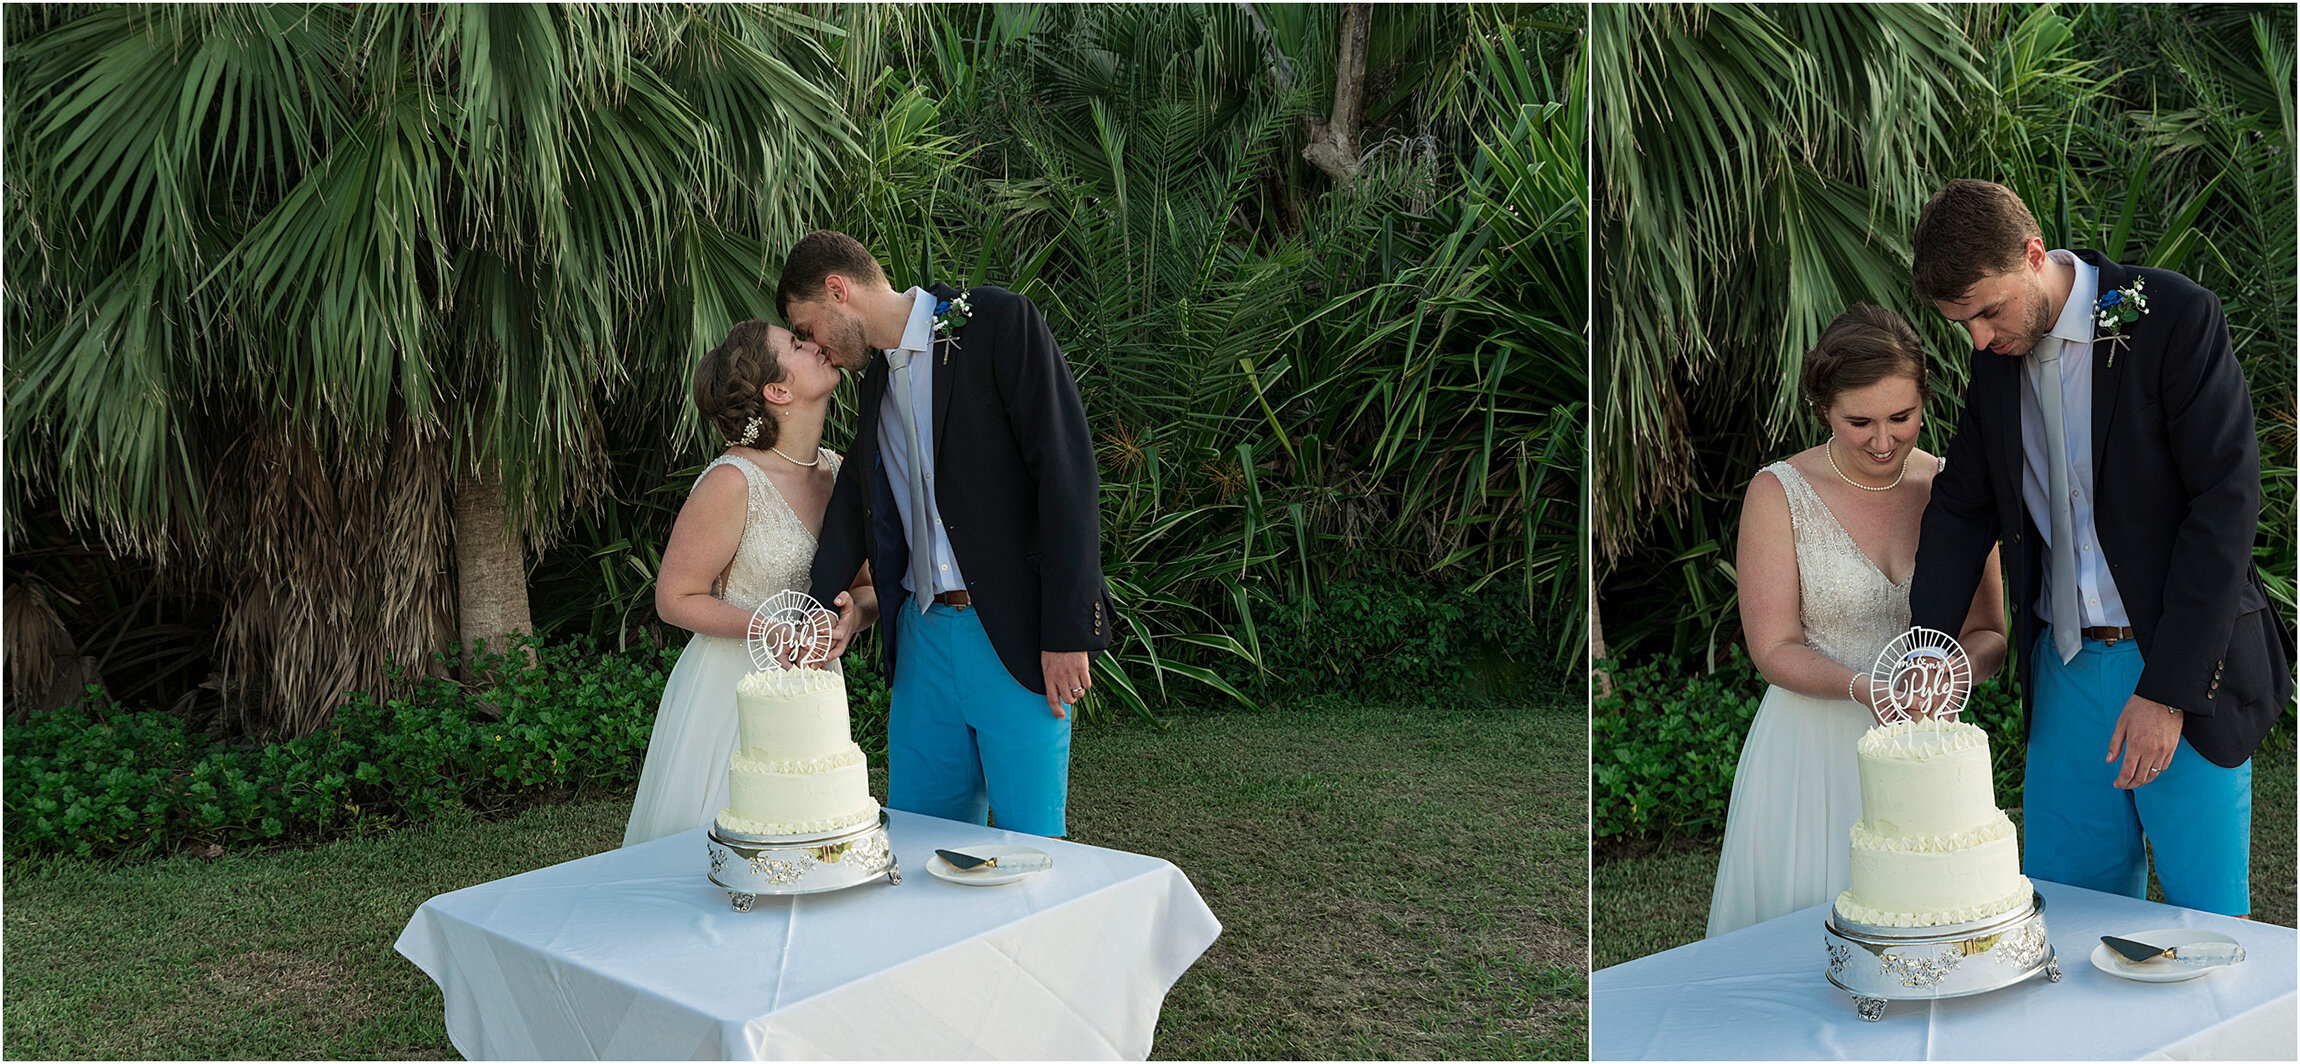 ©FianderFoto_Bermuda Wedding_Cambridge Beaches_089.jpg